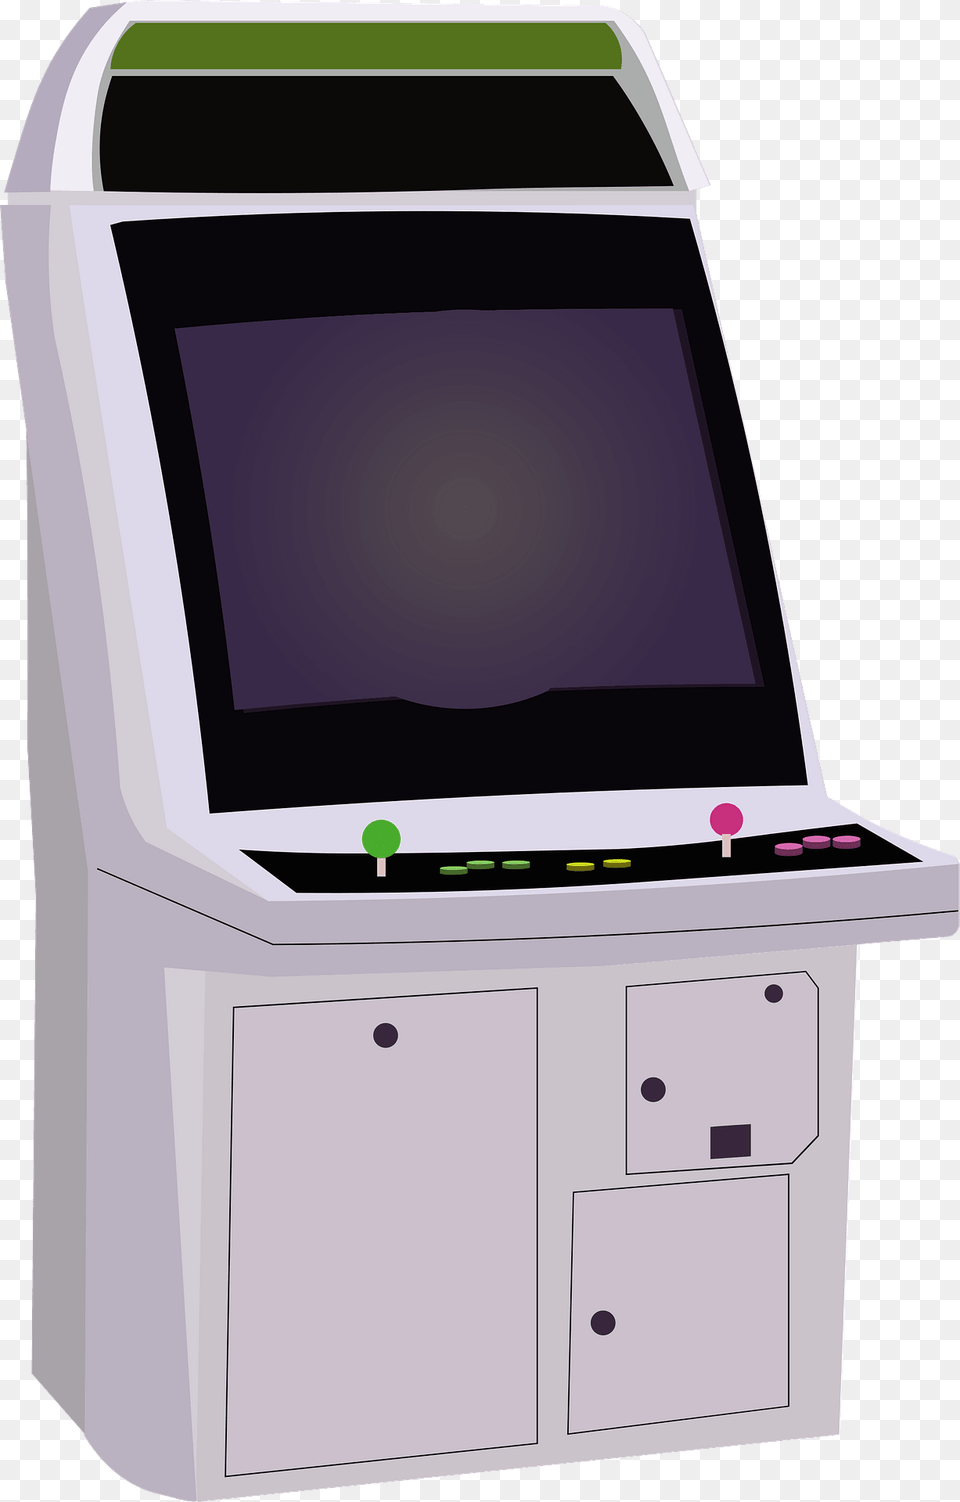 Arcade Game Clipart, Arcade Game Machine Free Transparent Png